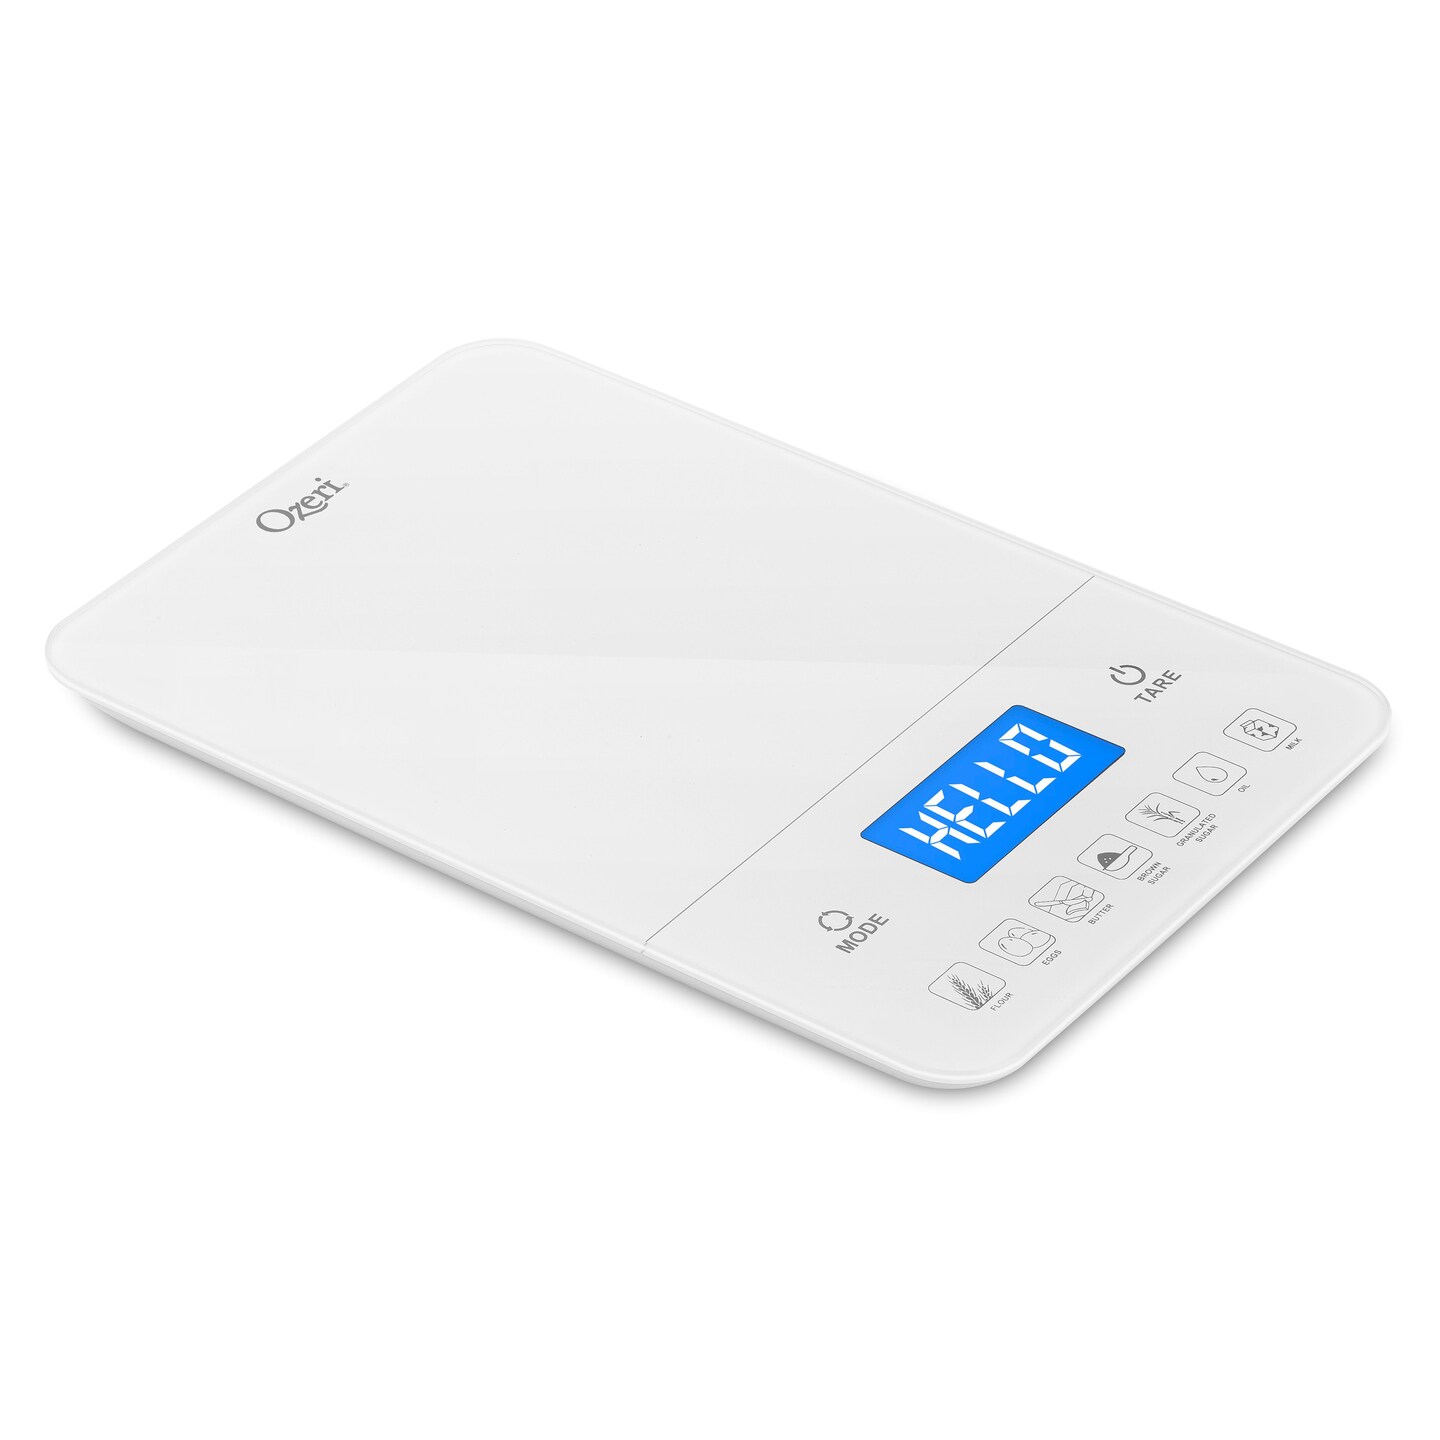 Ozeri Pro Digital Kitchen Food Scale 1G to 12 lbs Capacity, White